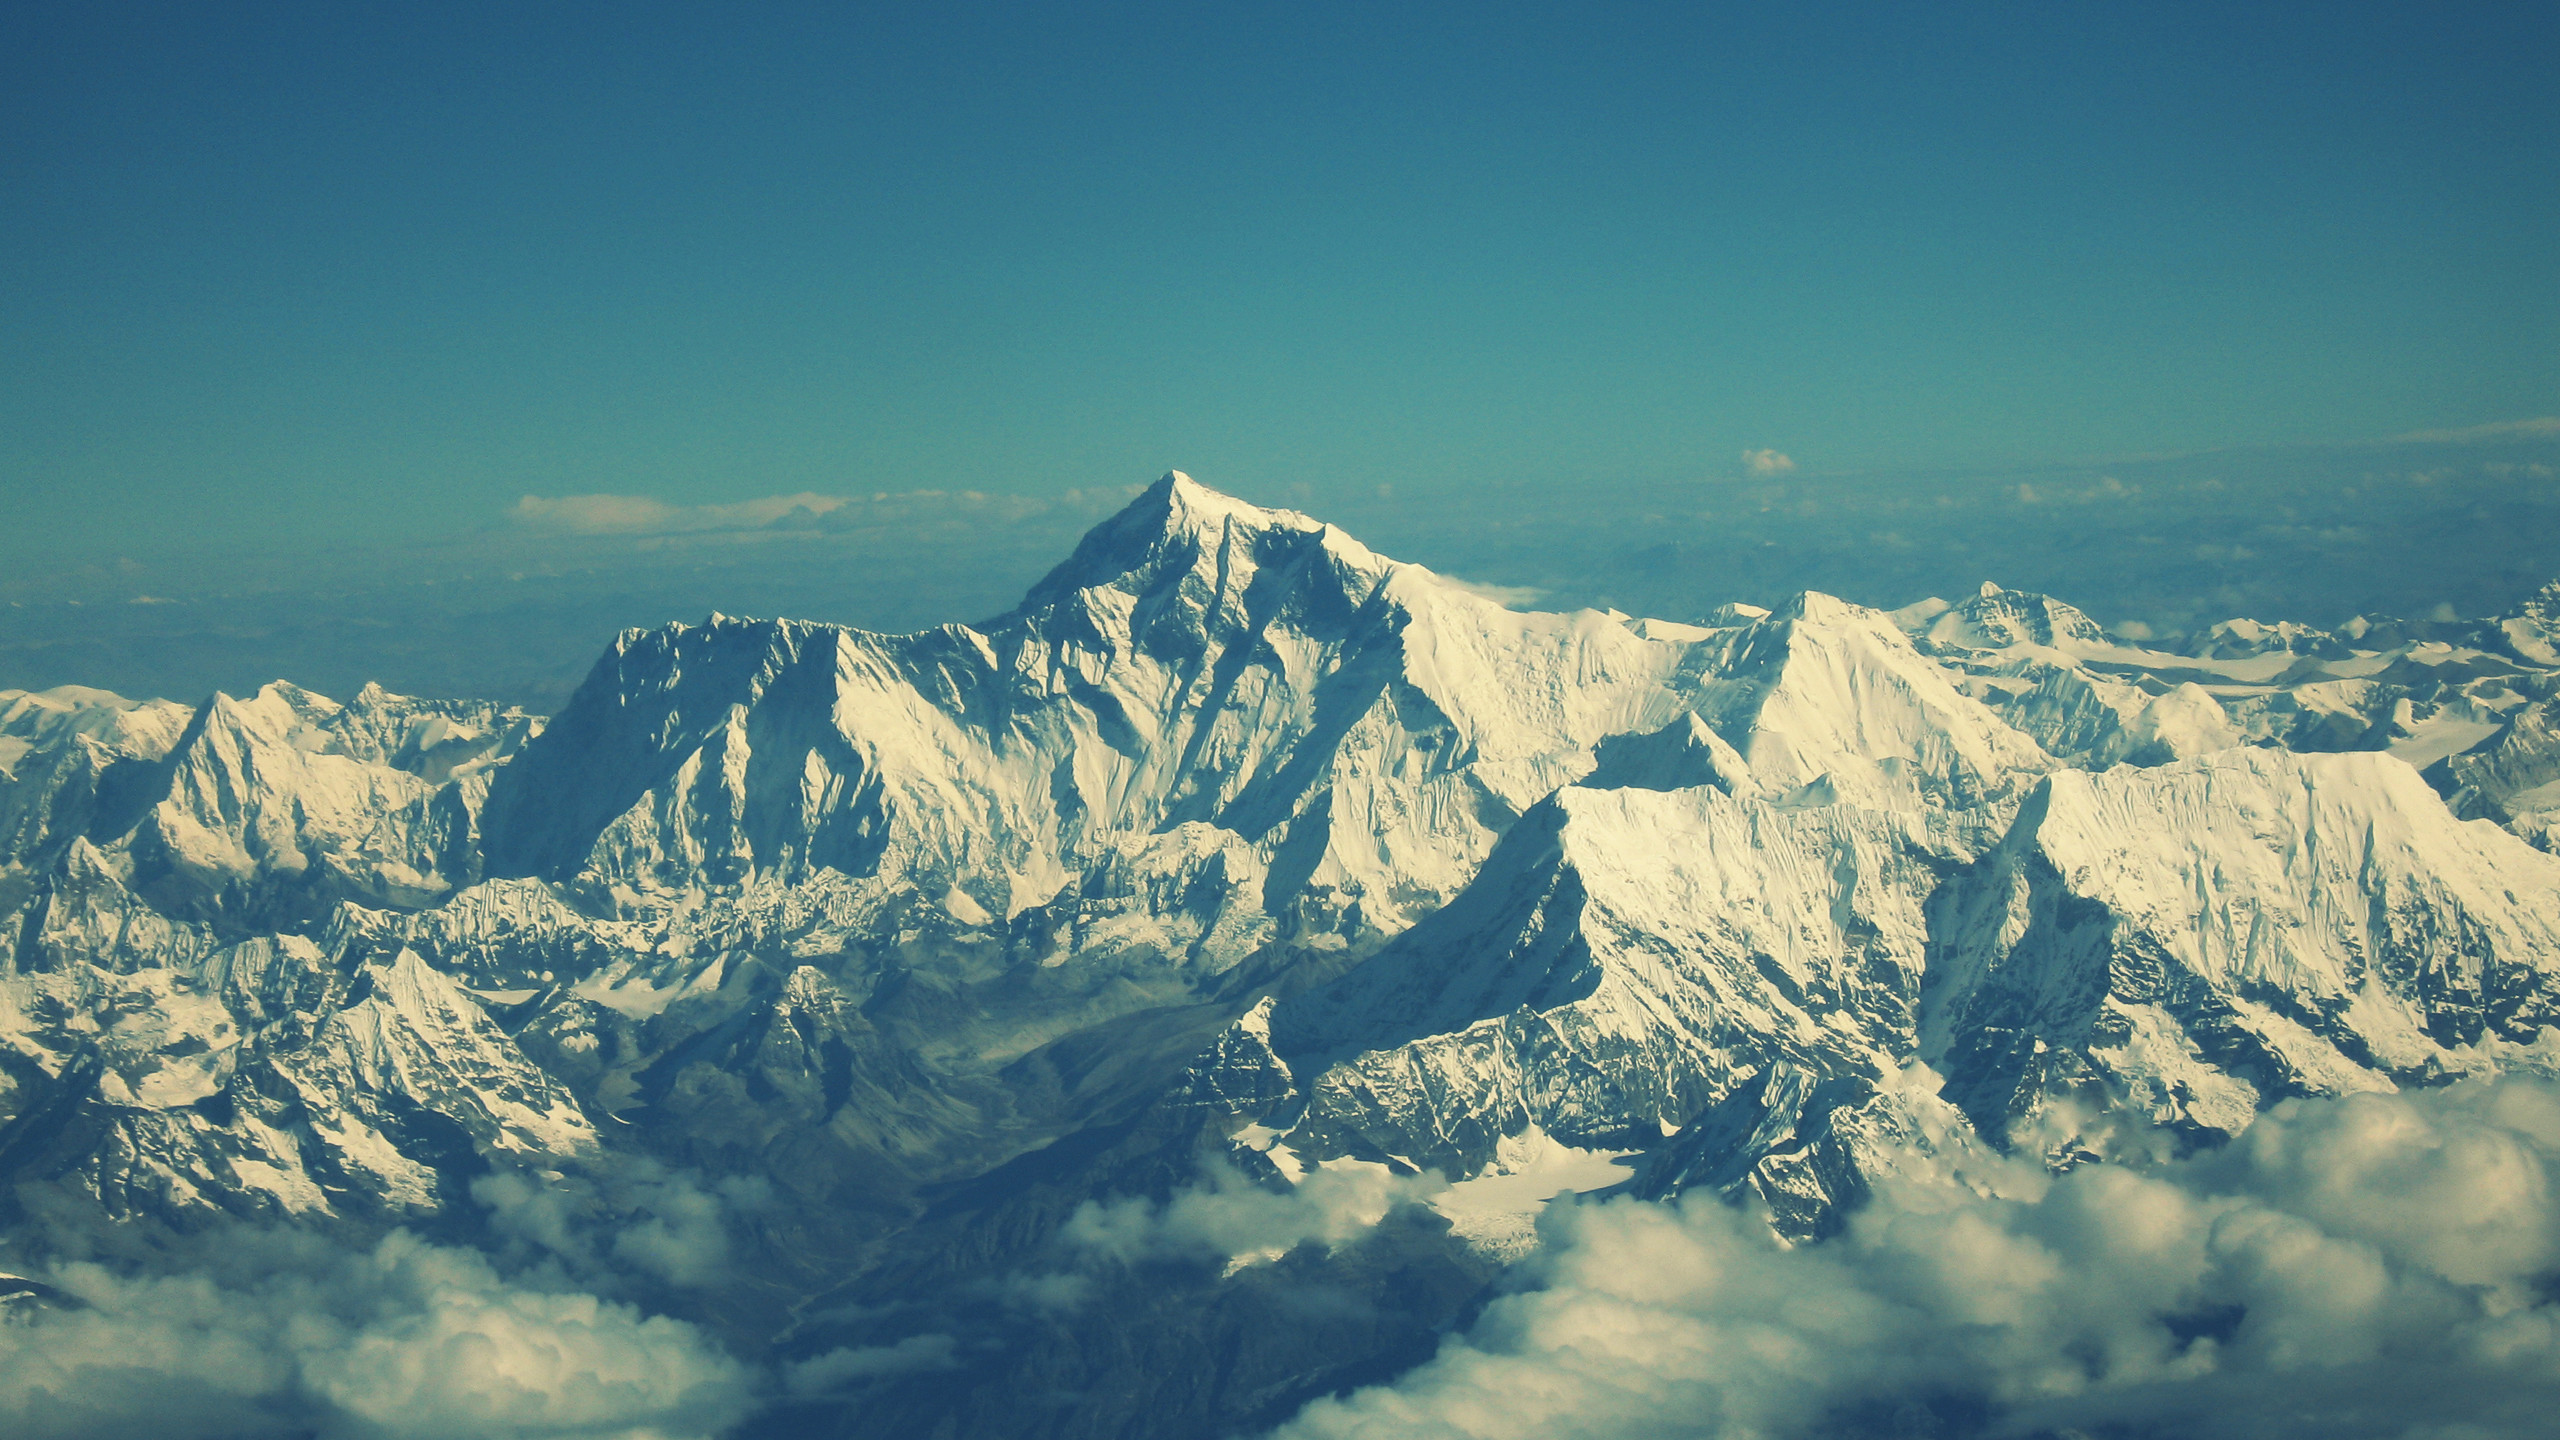 2560x1440 Himaliyas Mountains 2560 x 1440 Background.